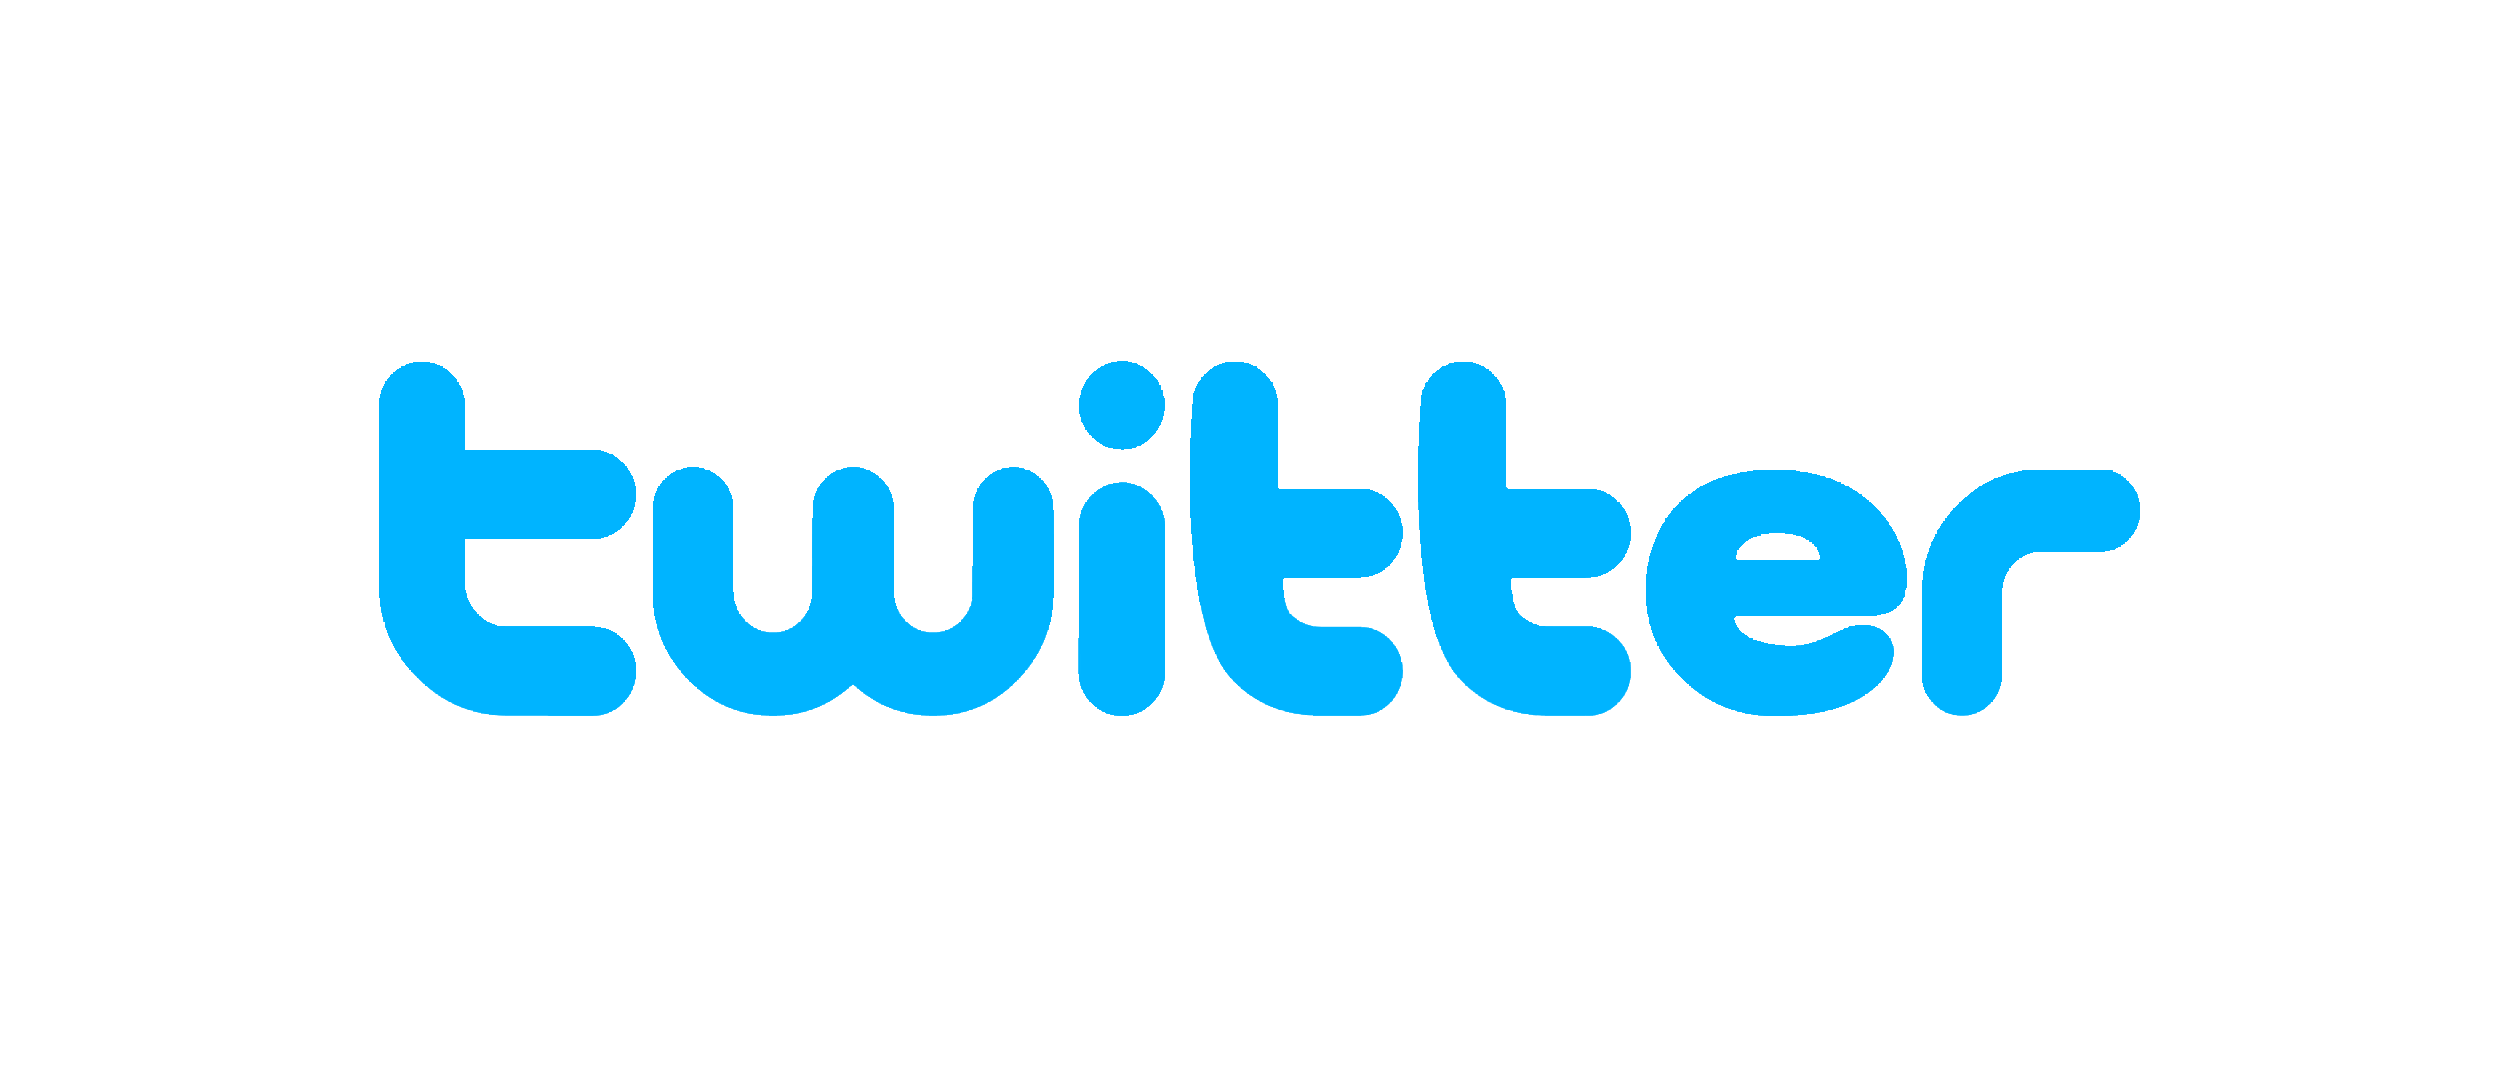 New Twitter Logo - Twitter Logo Logospikecom Famous And Free Vector Logos Logo Image